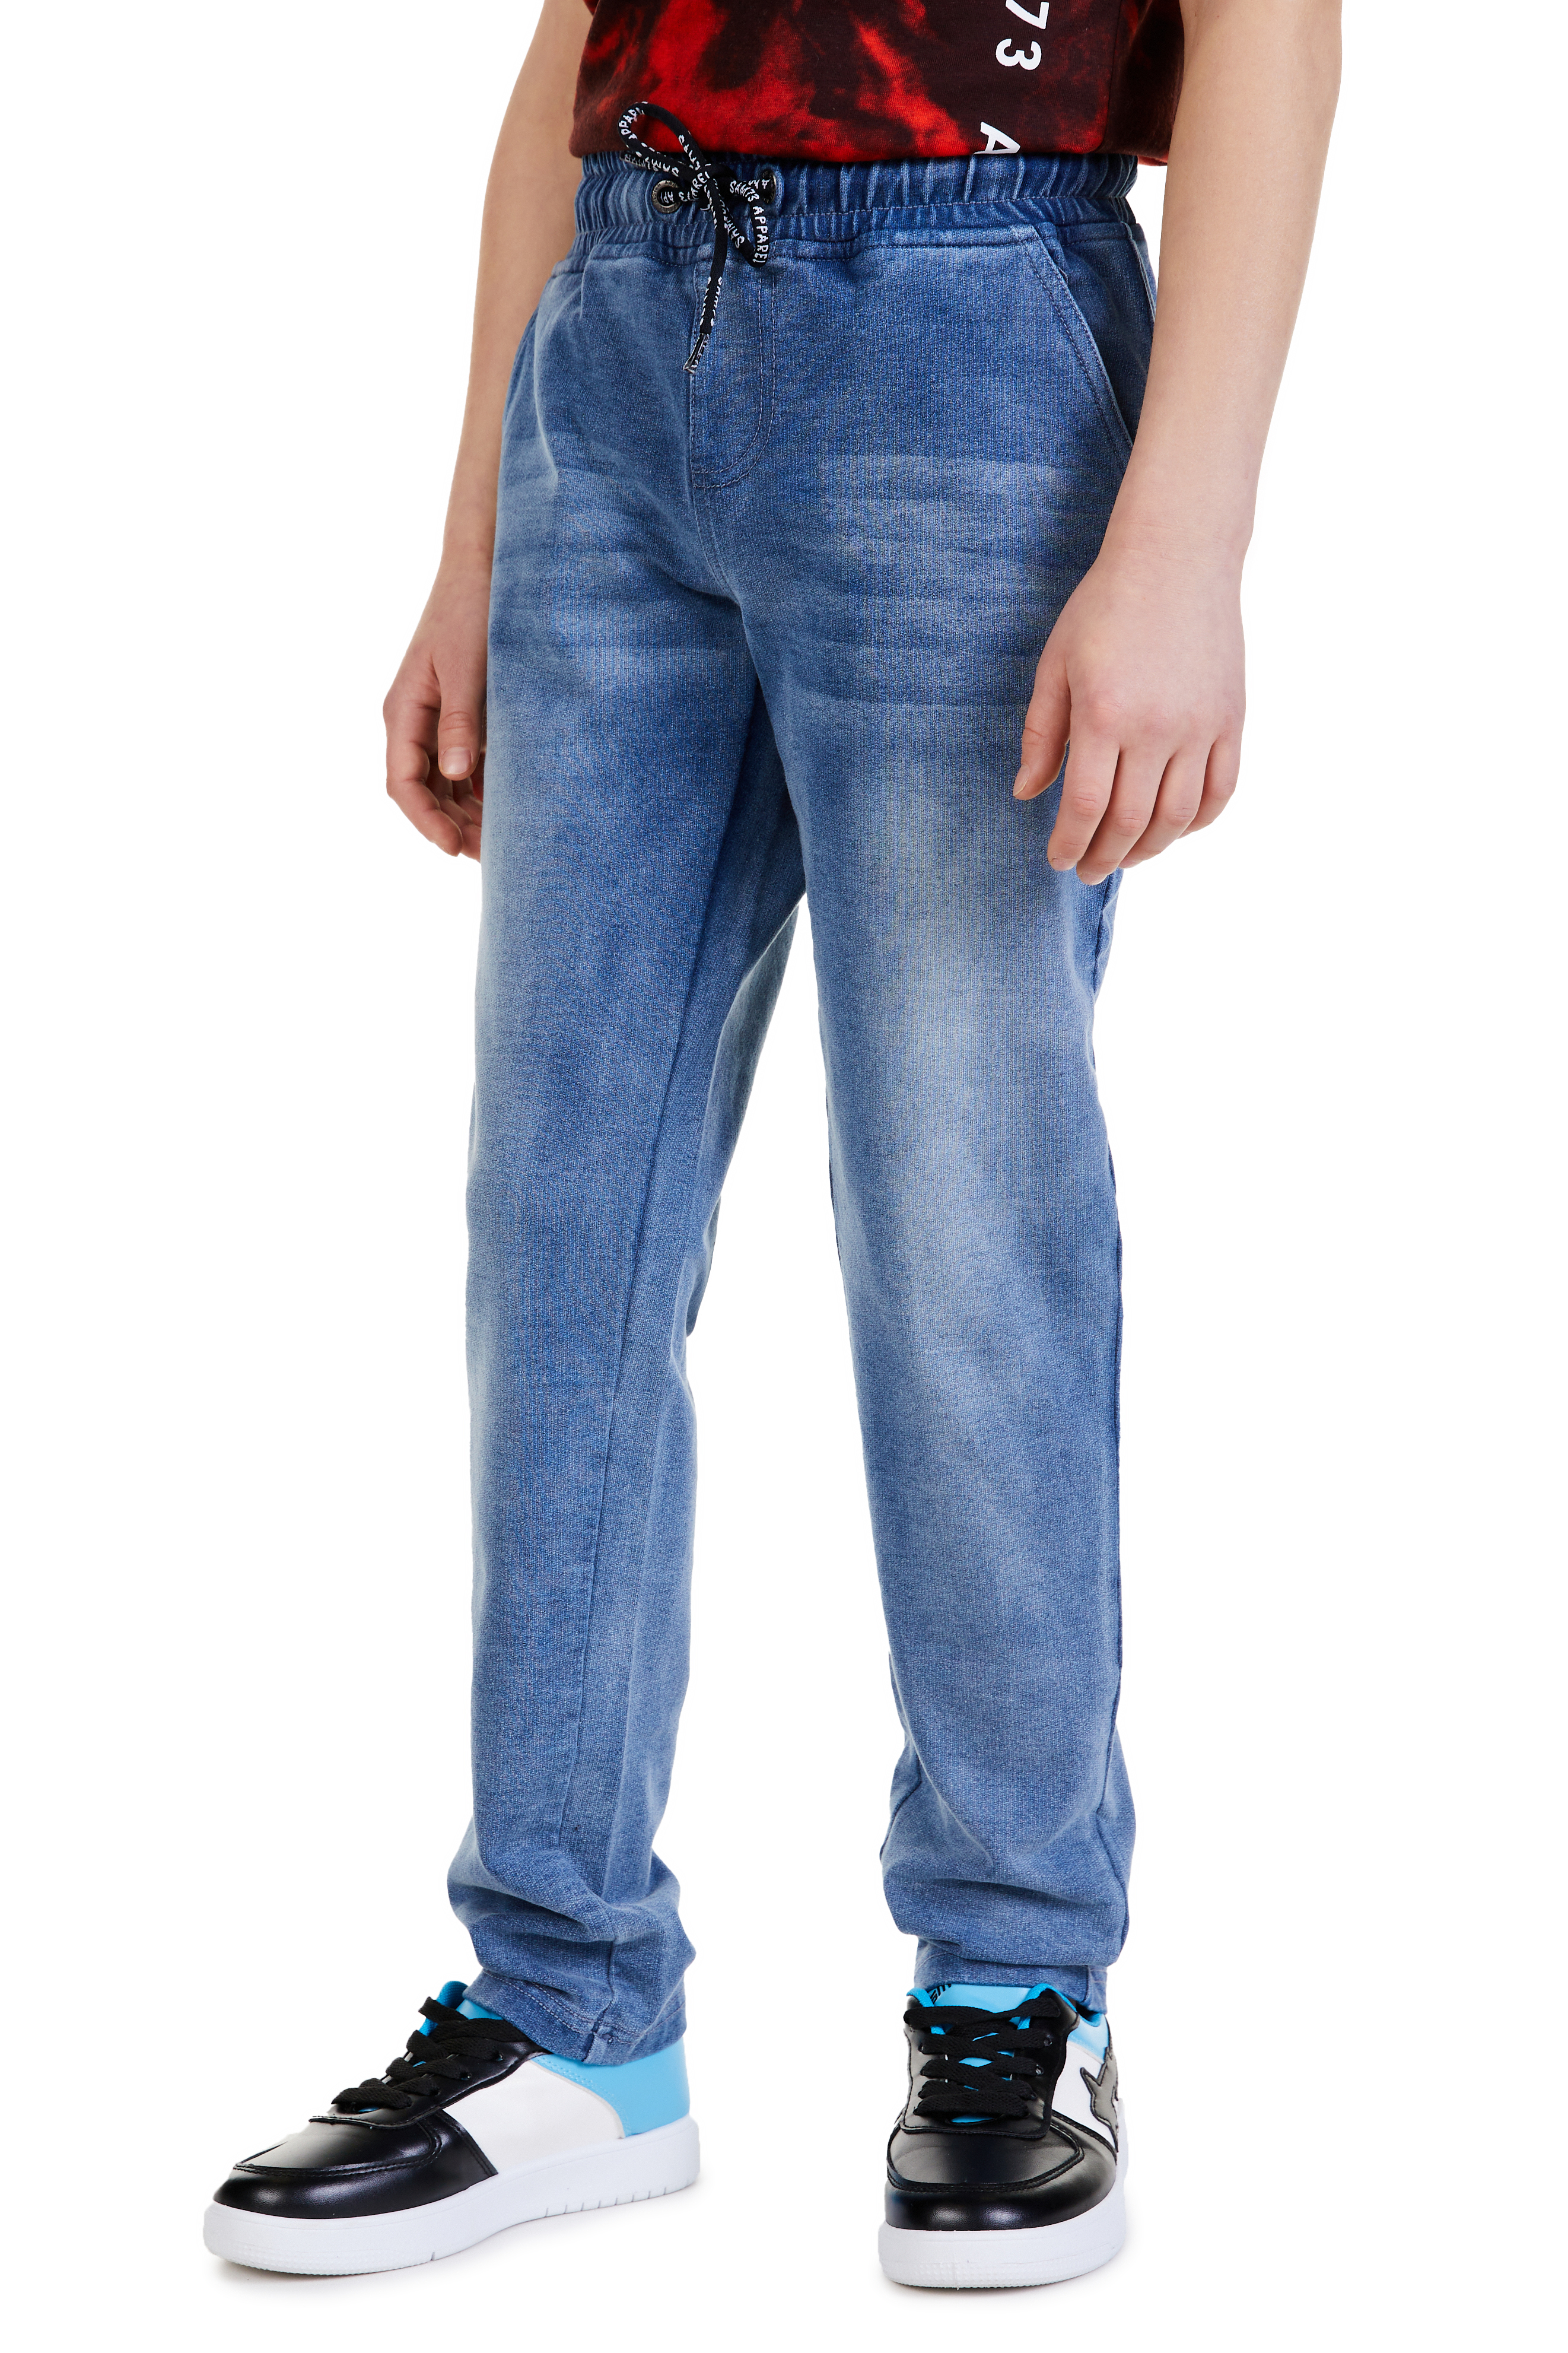 SAM 73 Chlapecké kalhoty BERNARD Modrá 152